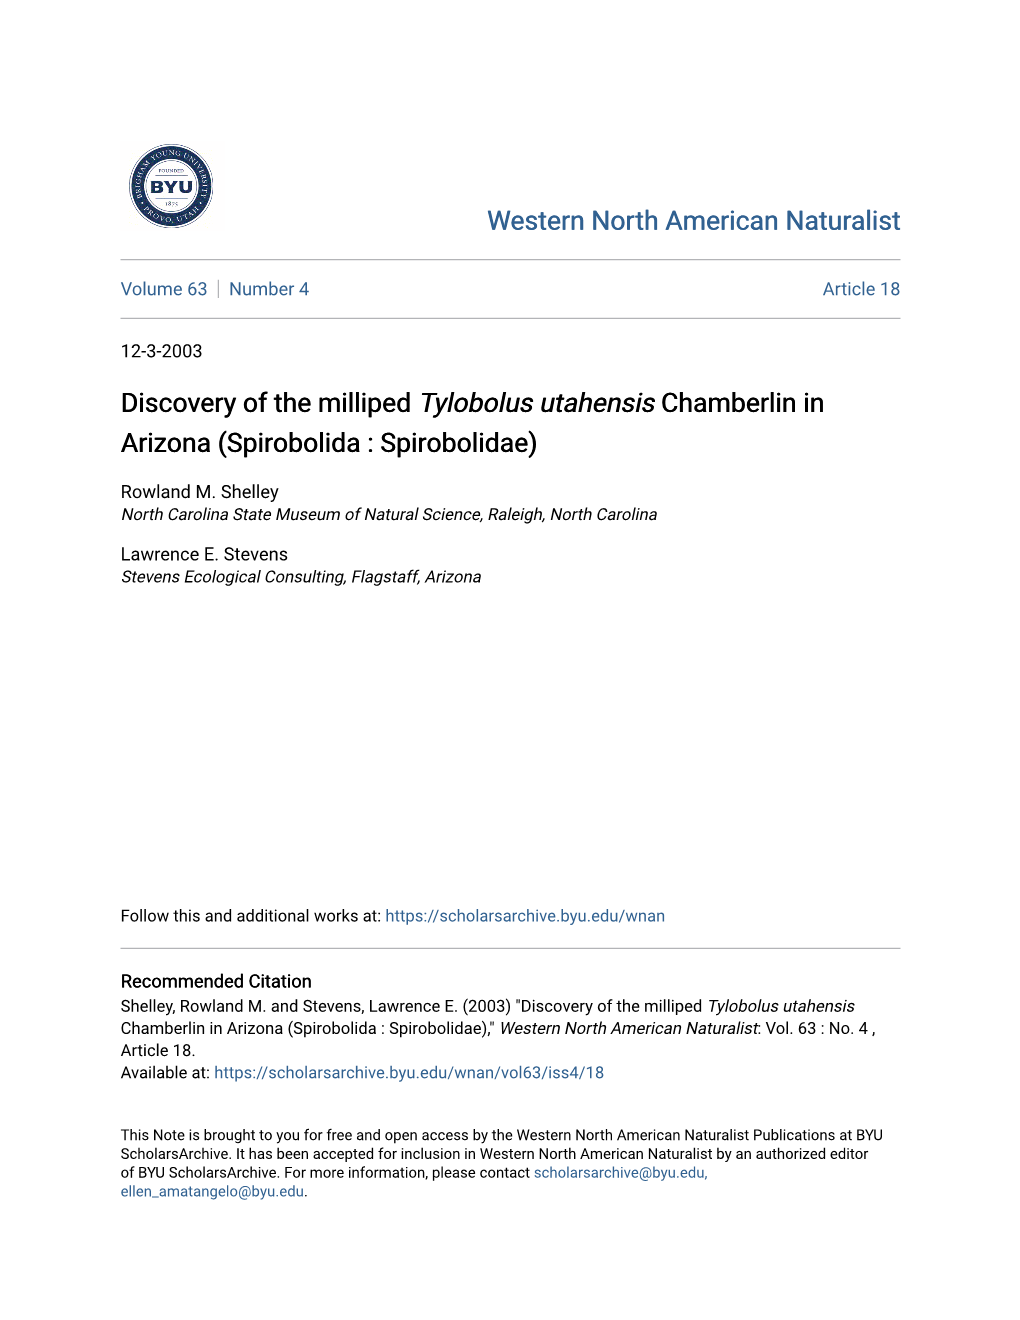 Discovery of the Milliped Tylobolus Utahensis Chamberlin in Arizona (Spirobolida : Spirobolidae)